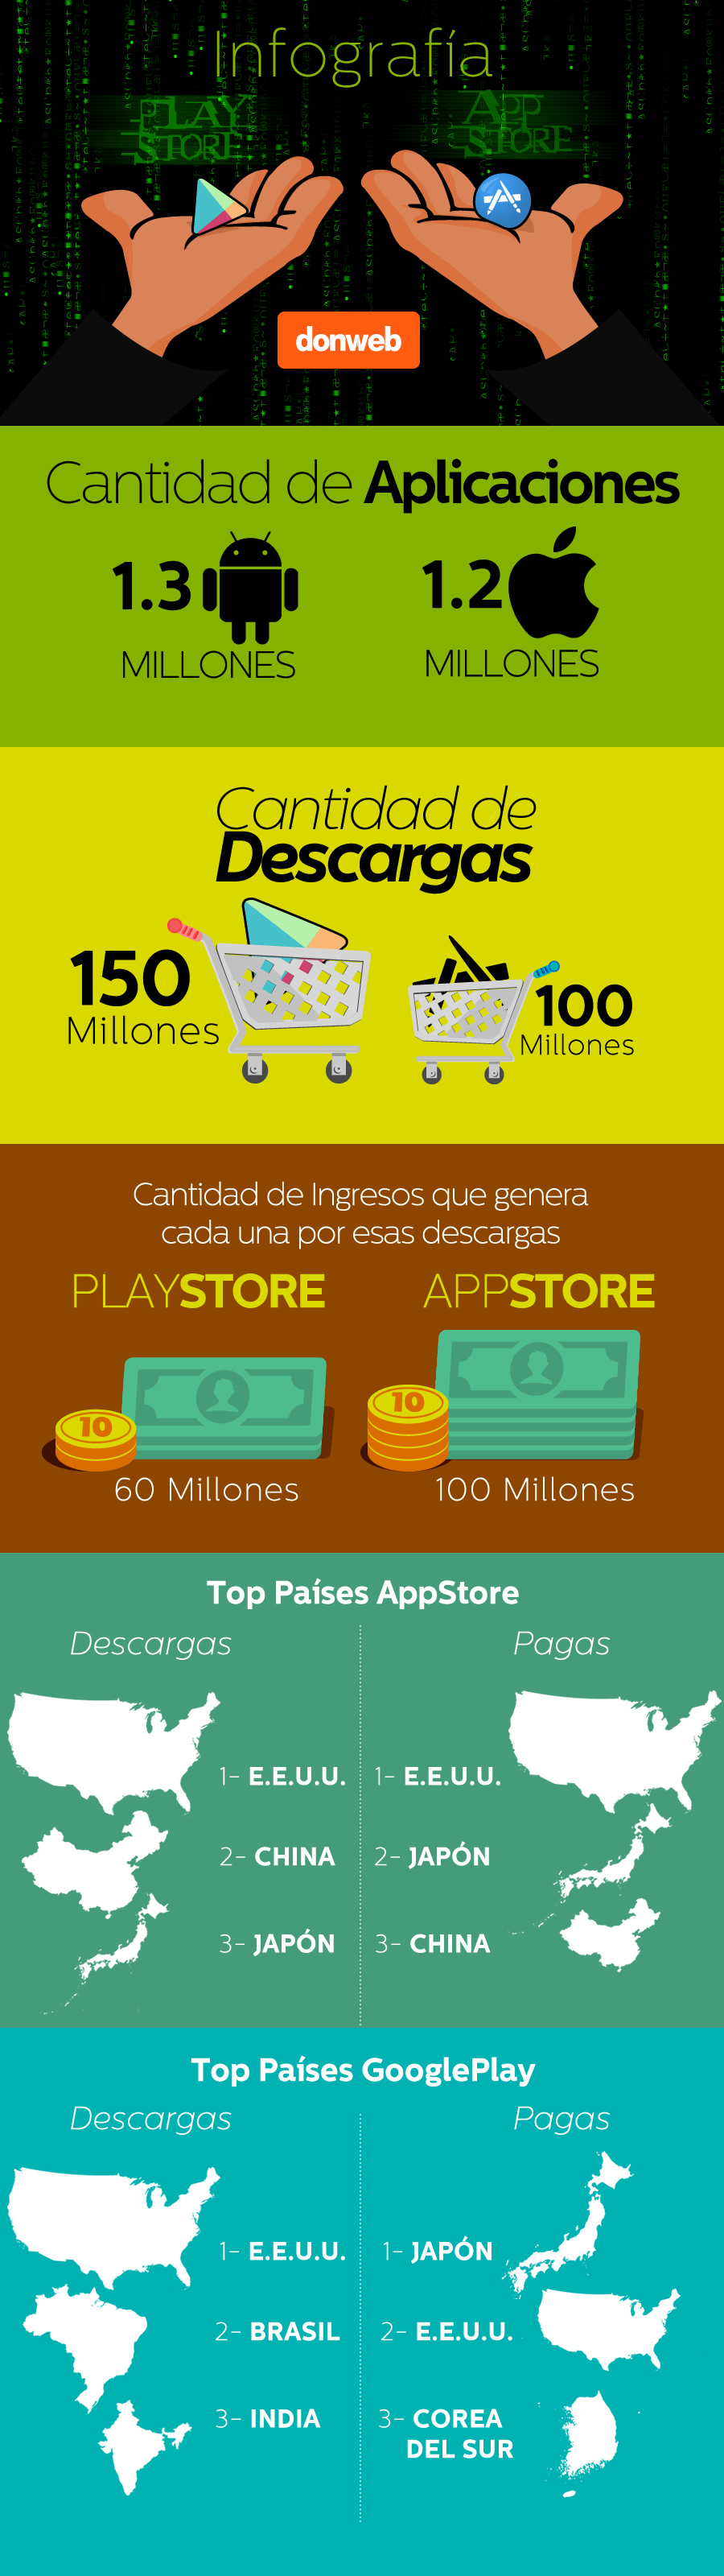 App Store vs Play Store | Infografía